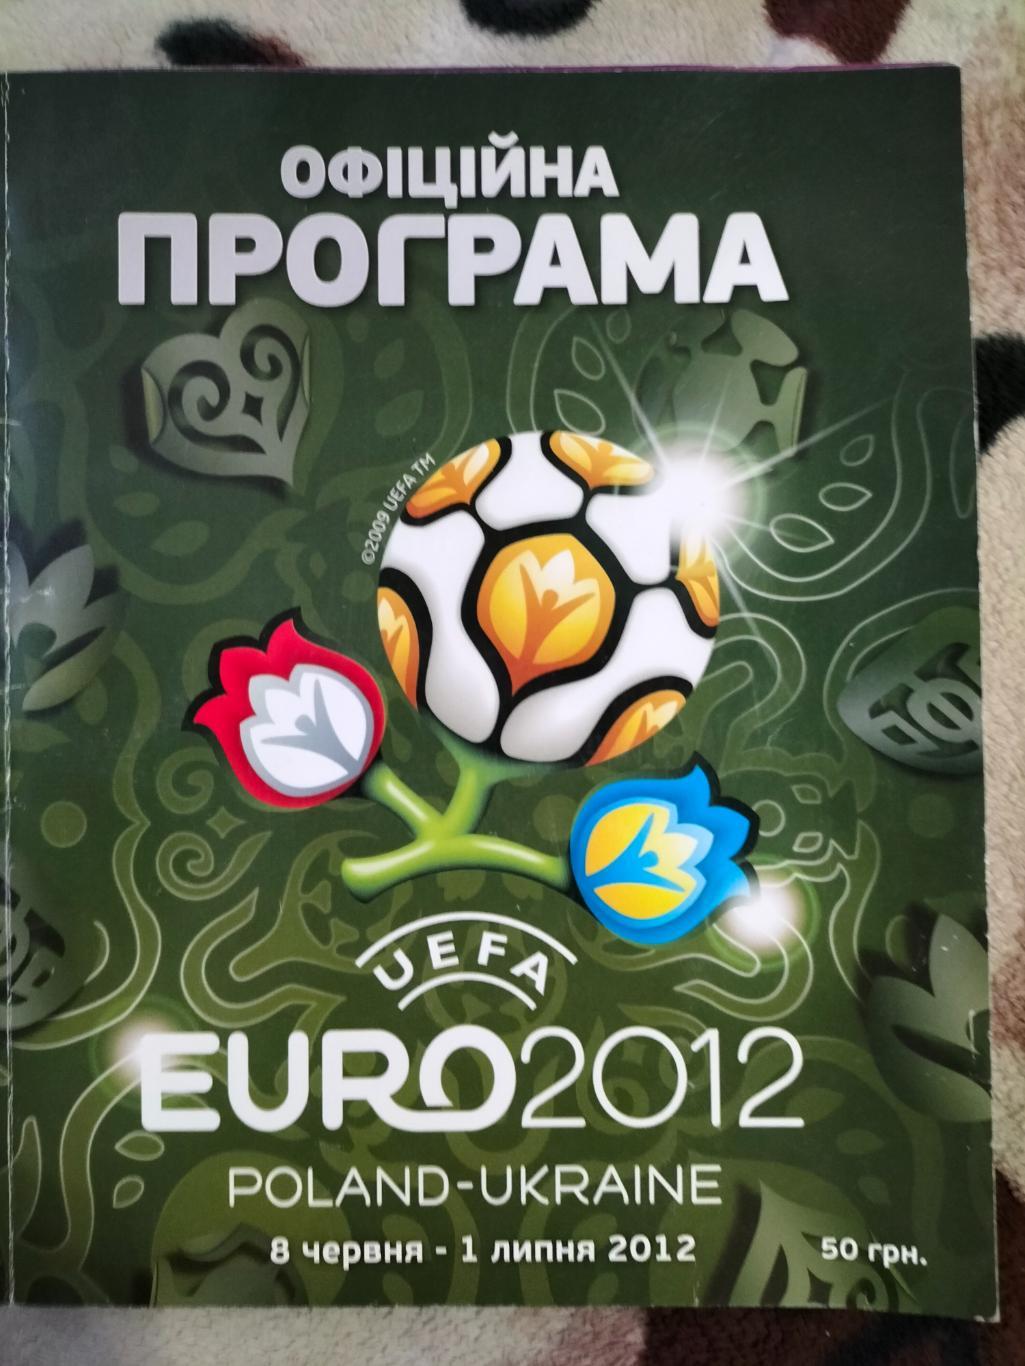 Evro 2012 официальная программа